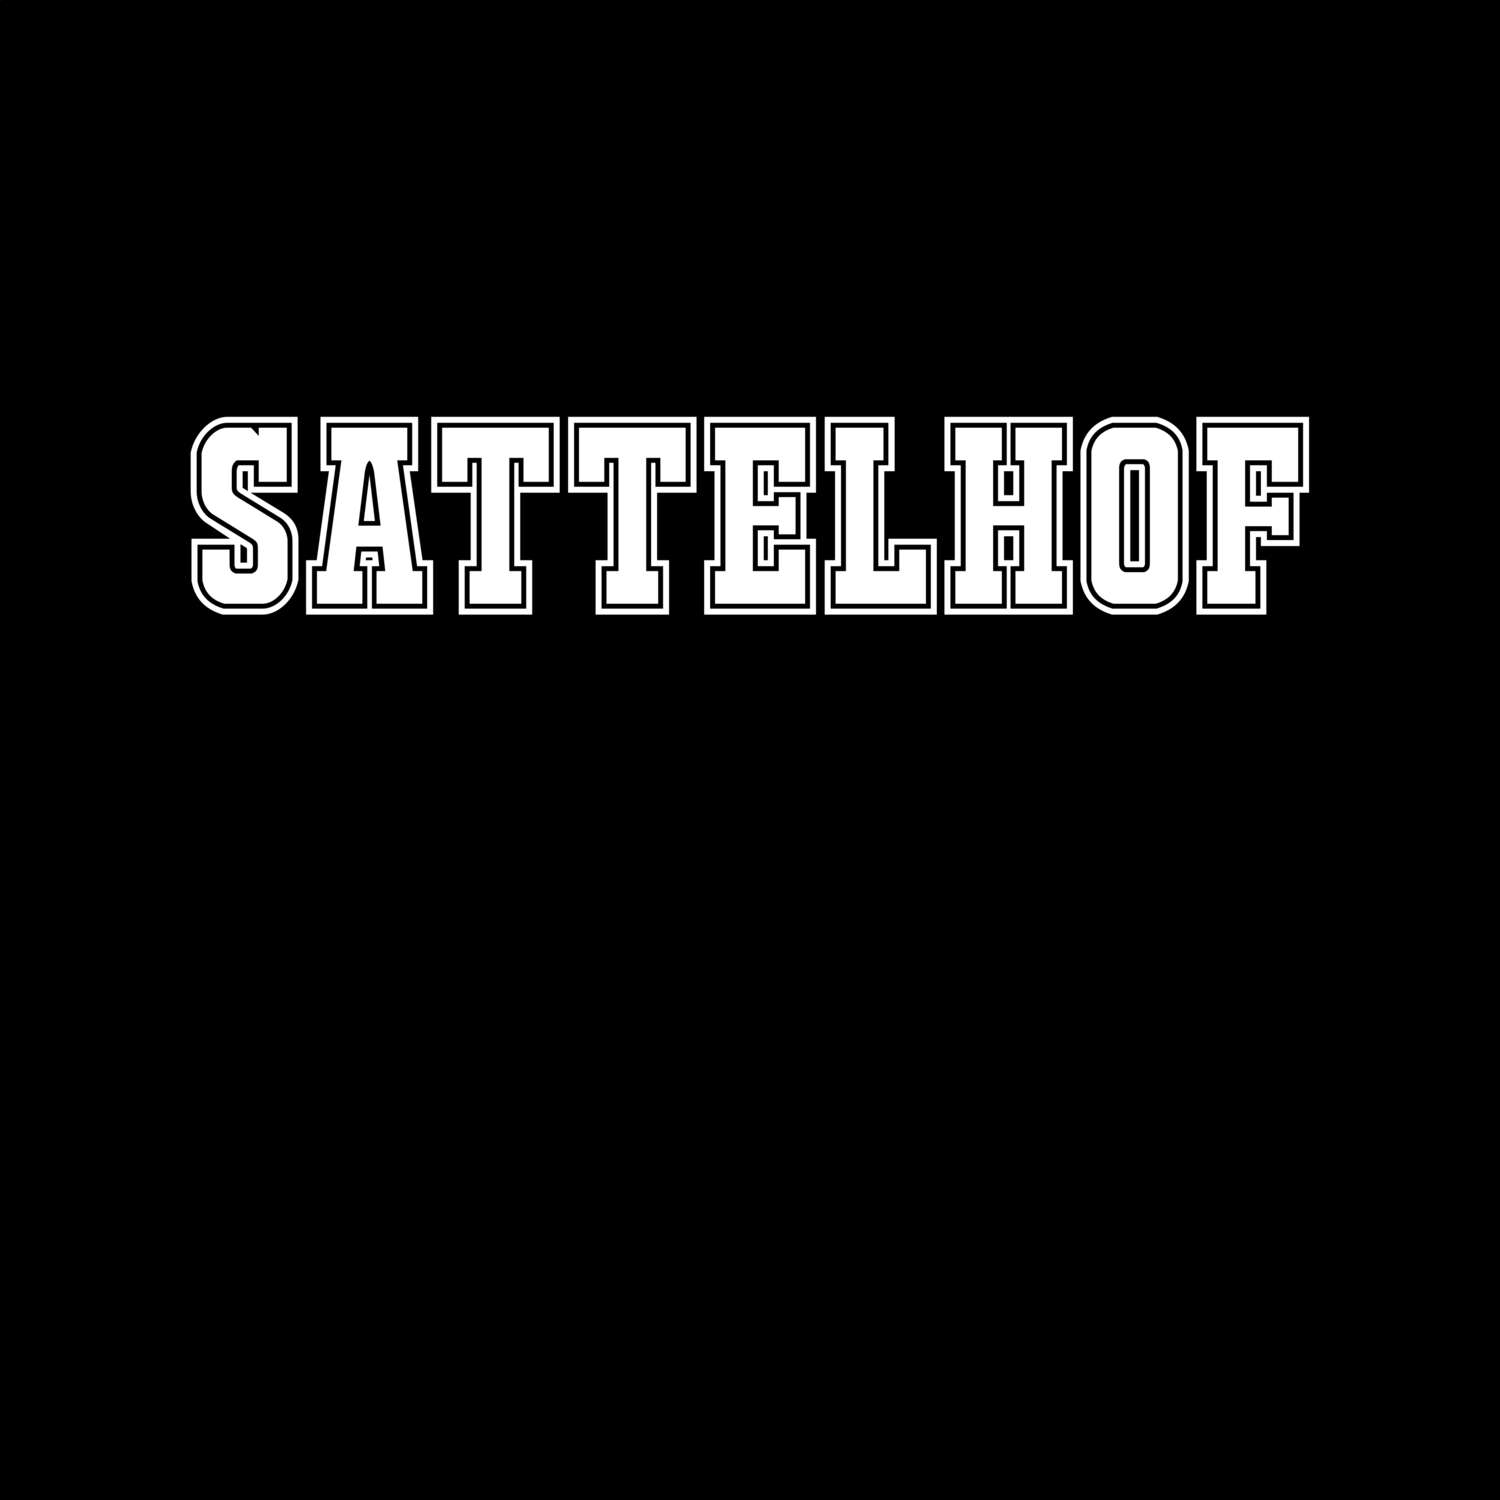 Sattelhof T-Shirt »Classic«